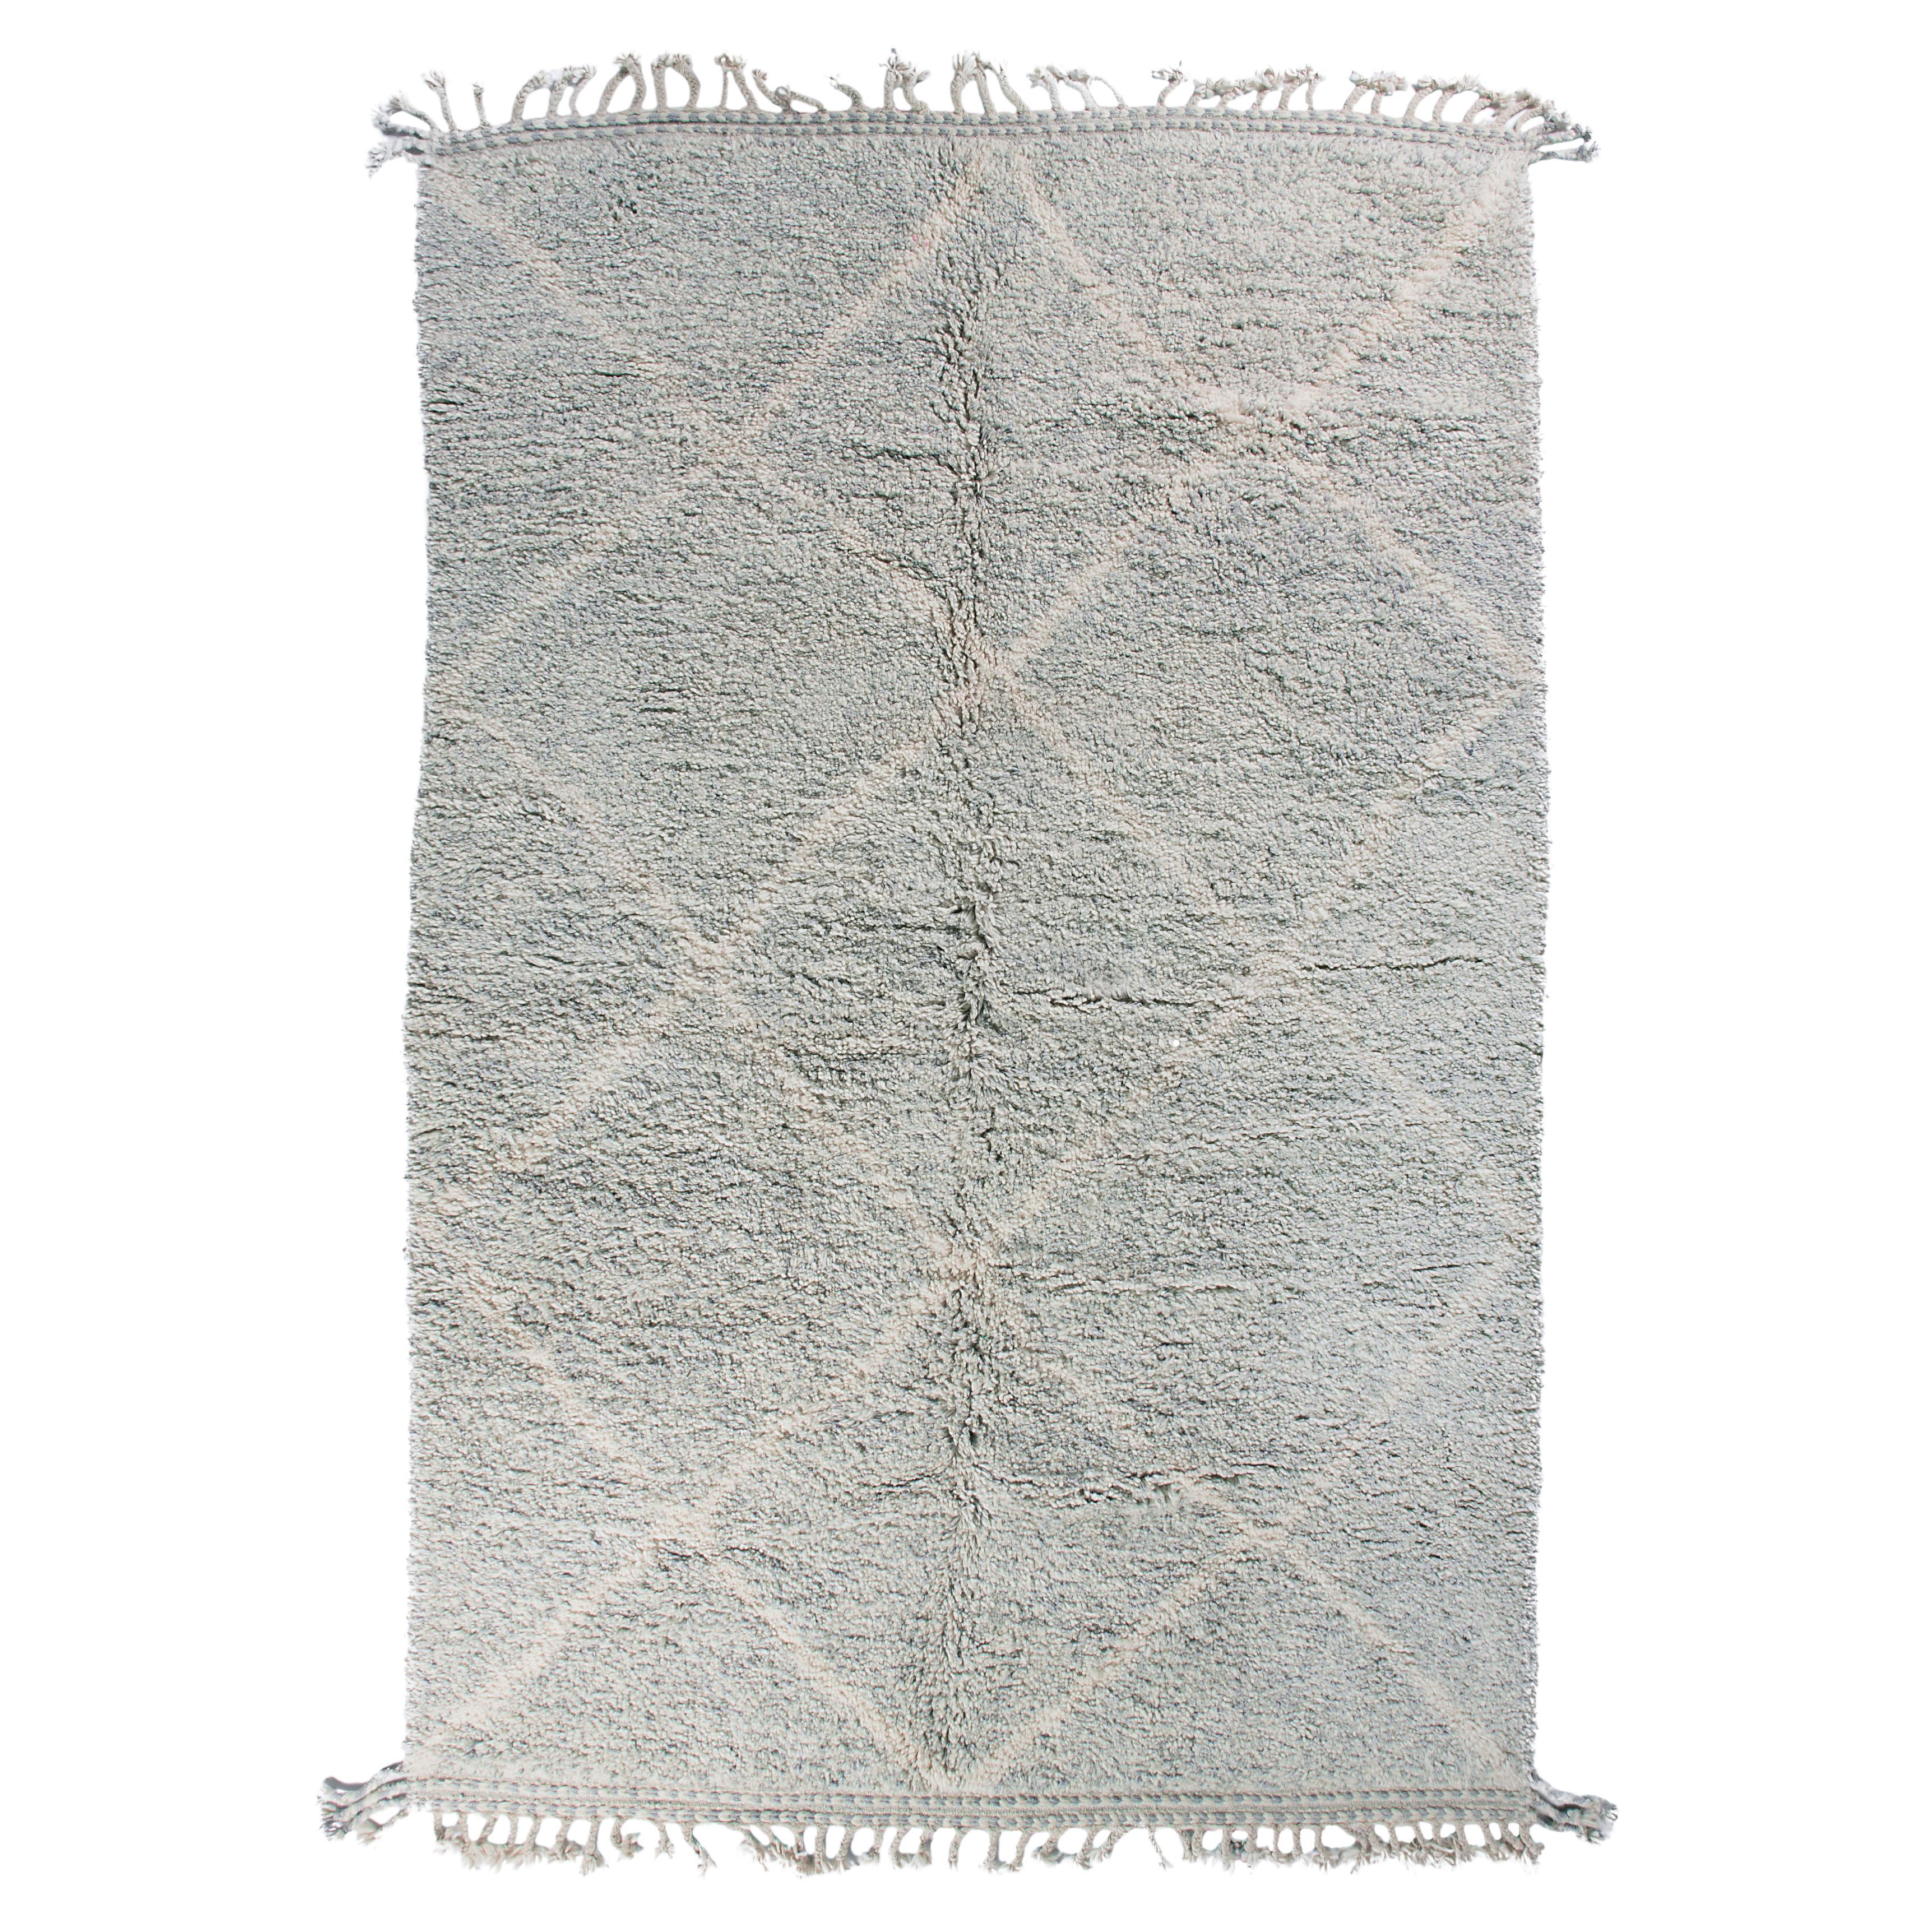 Grey Beni Ourain rug / Moroccan Brand New Diamond Pattern Rug, In Stock